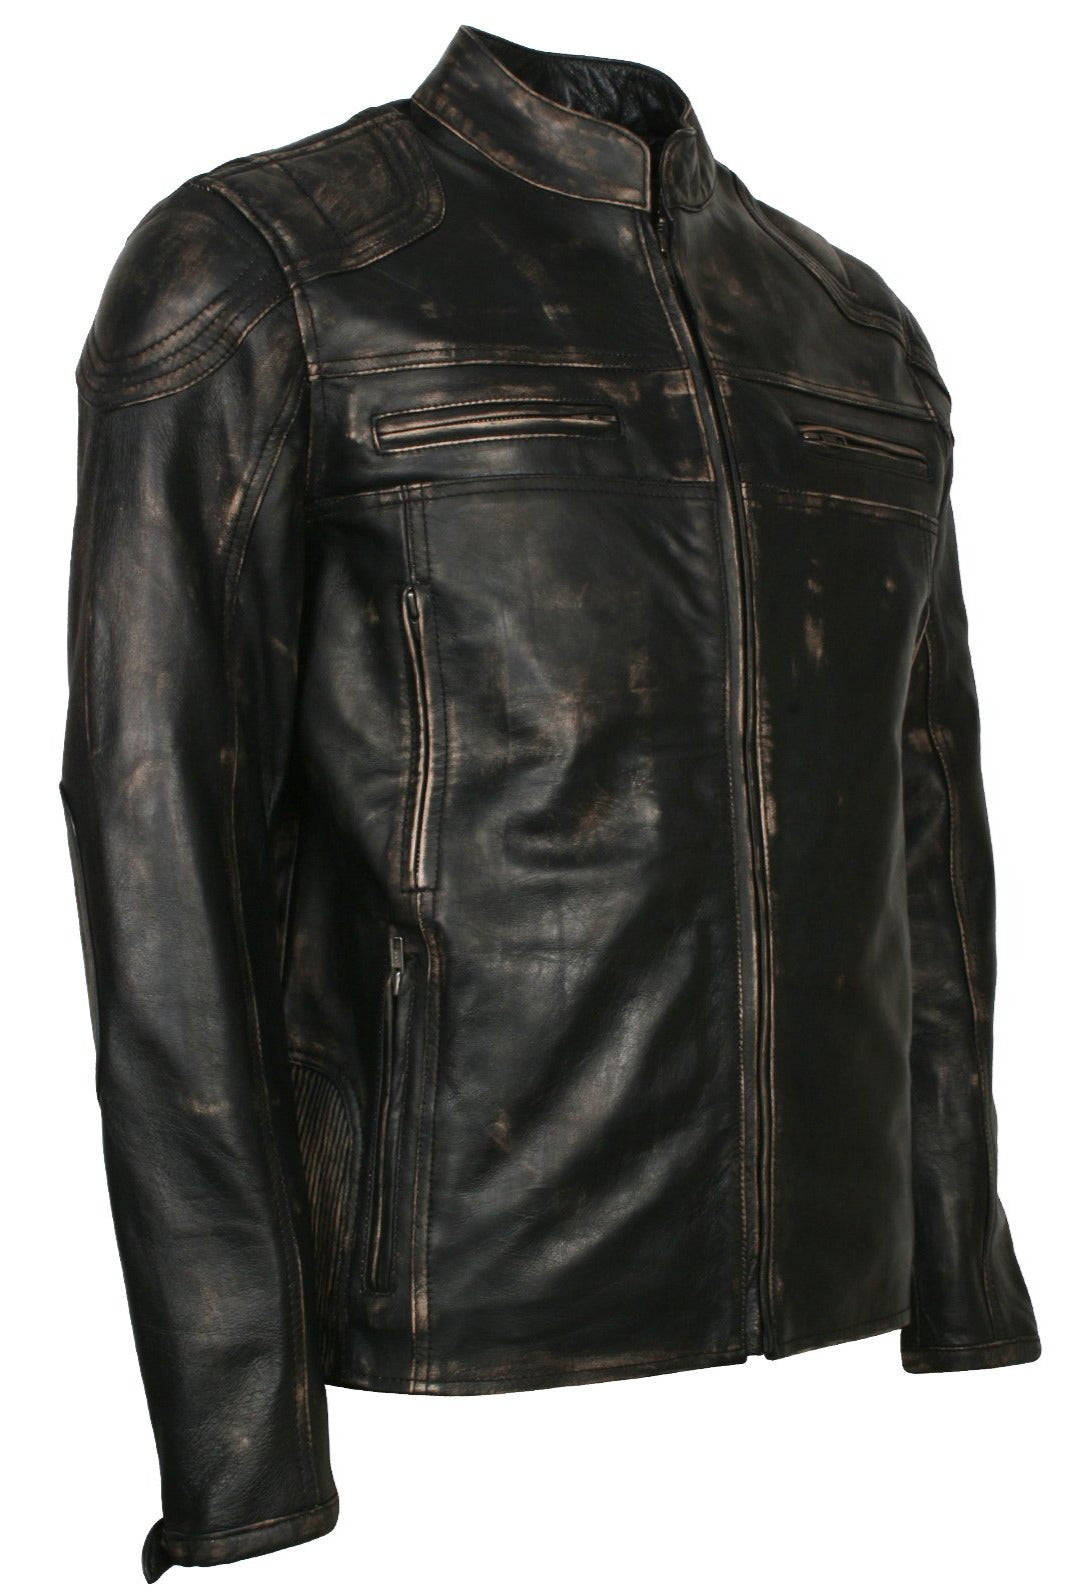 Black Leather Jacket New Look Mens Biker 